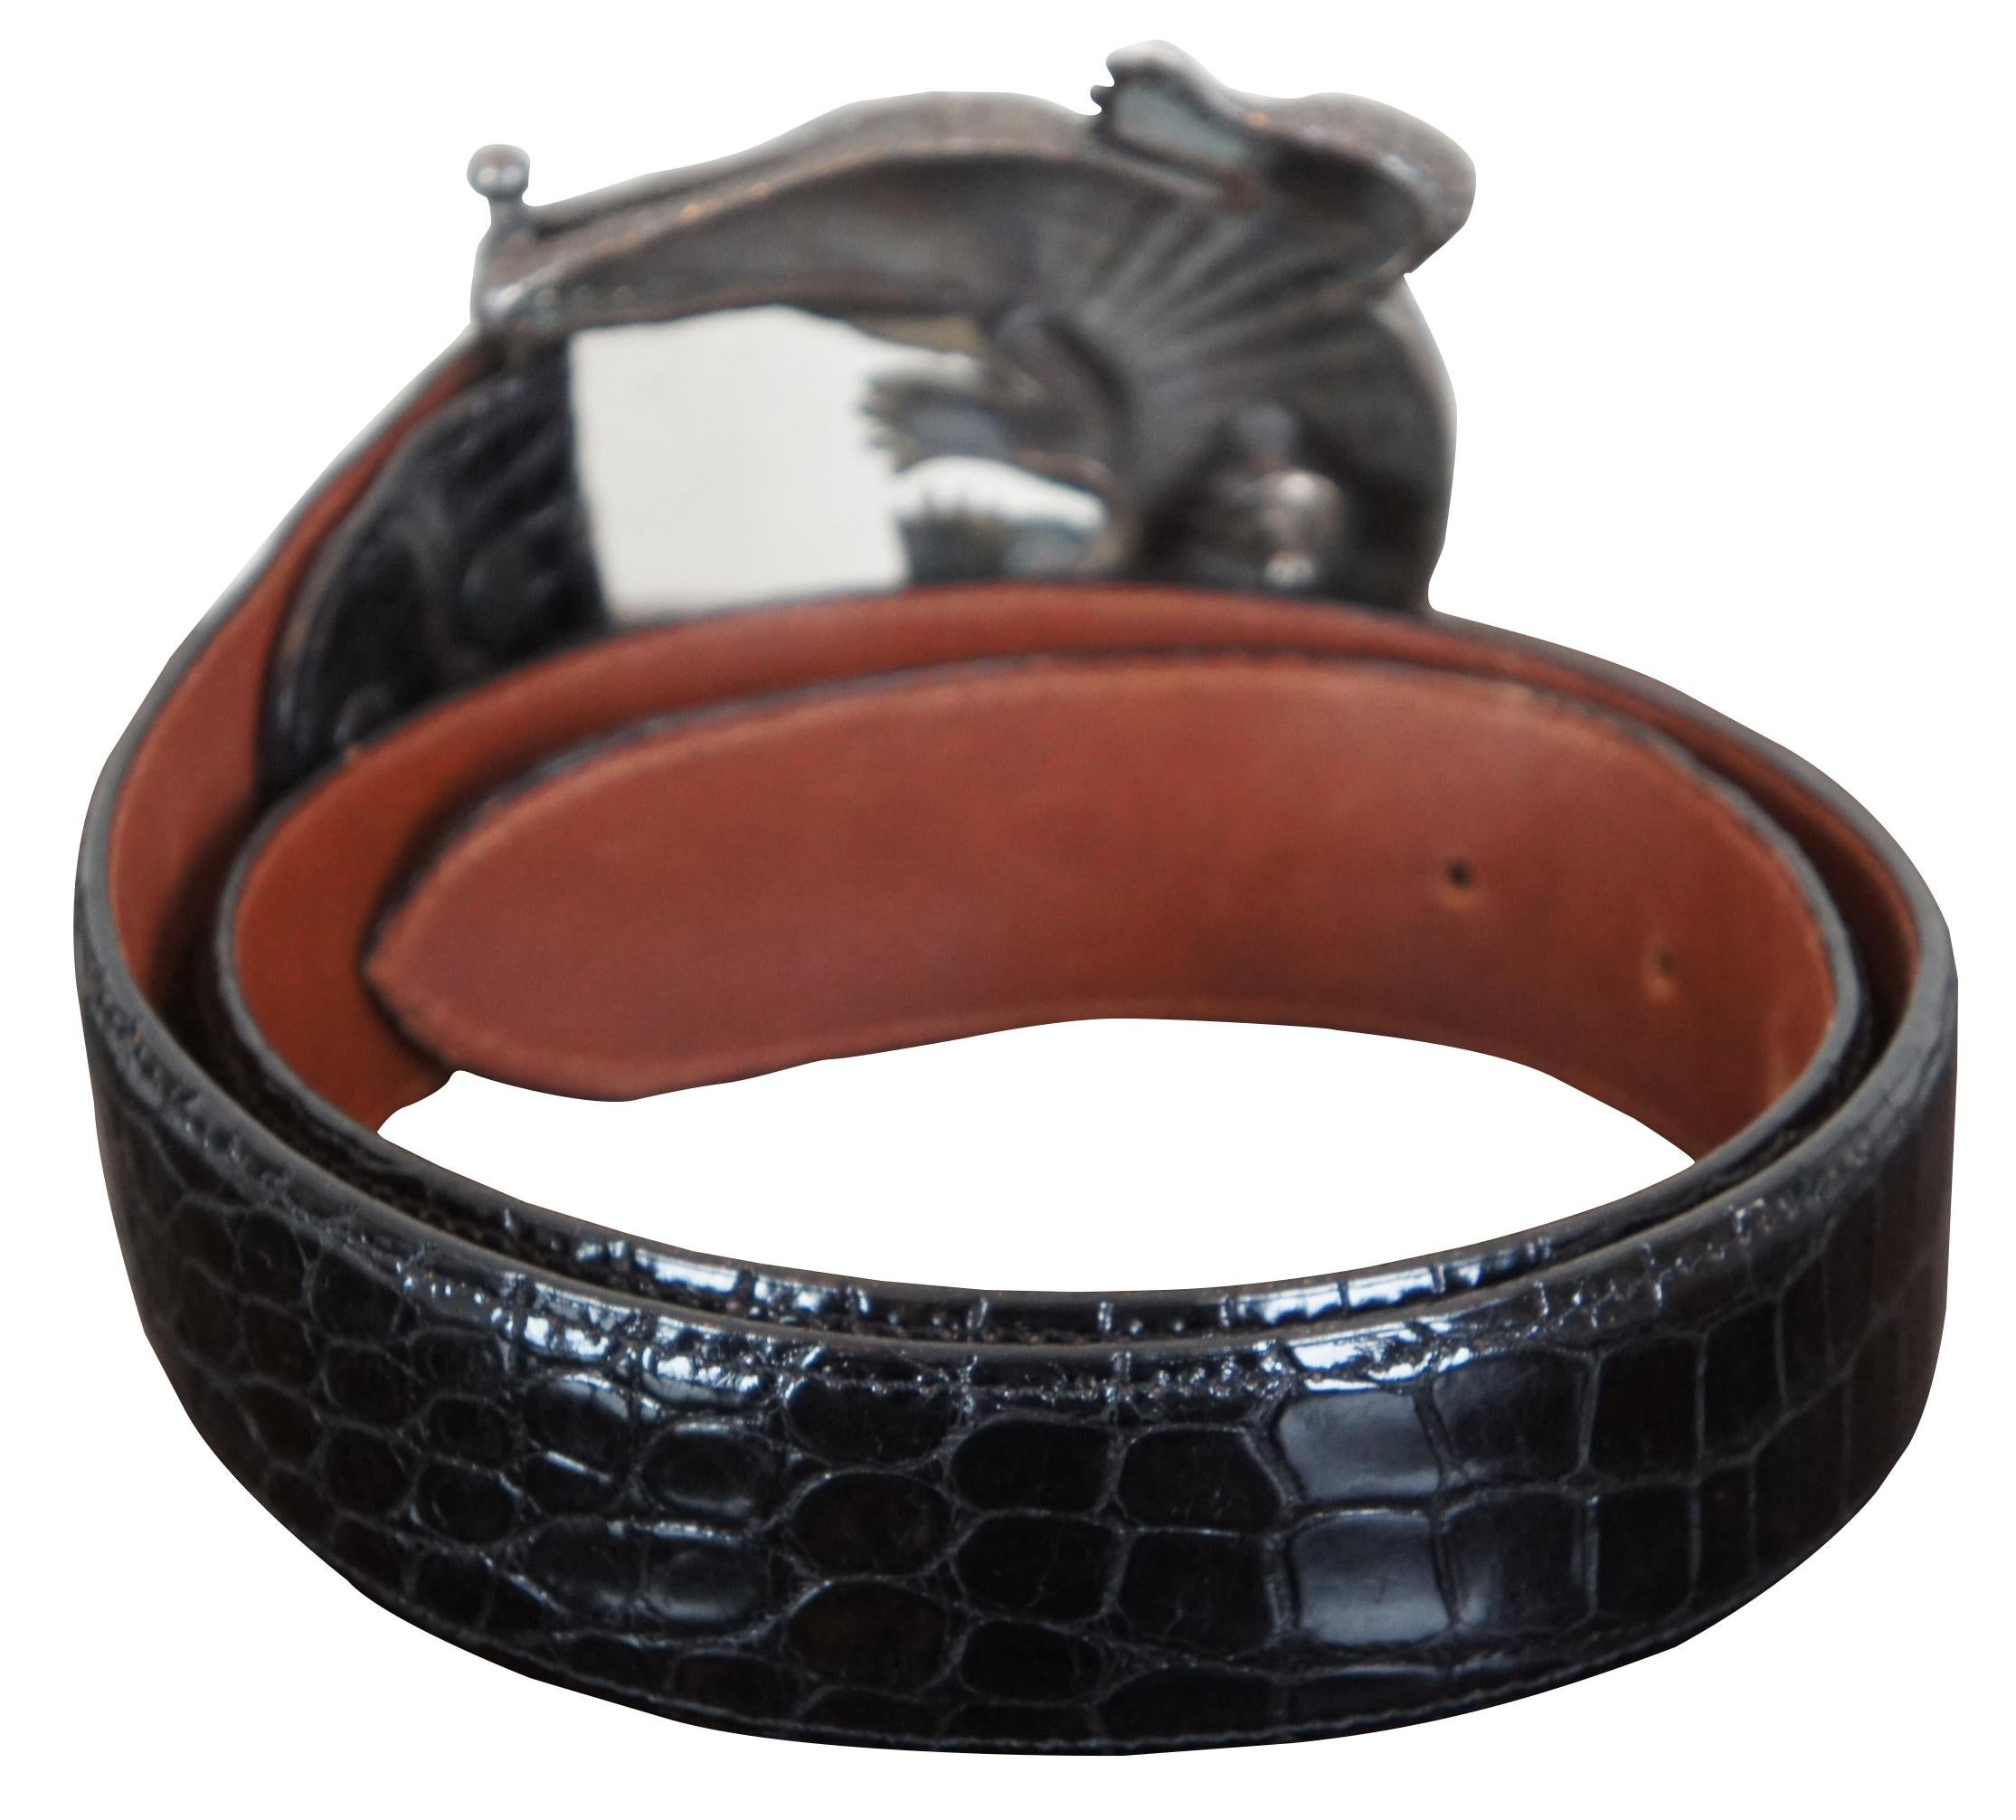 Vintage Barry Kieselstein-Cord sterling silver alligator belt buckle and brown crocodile skin belt.

Belt - 26.5” to 30.5” x 1.5” / Buckle - 3.5” x 3.5” x 0.5”/ 167 g (Length x Width x Depth/Weight)